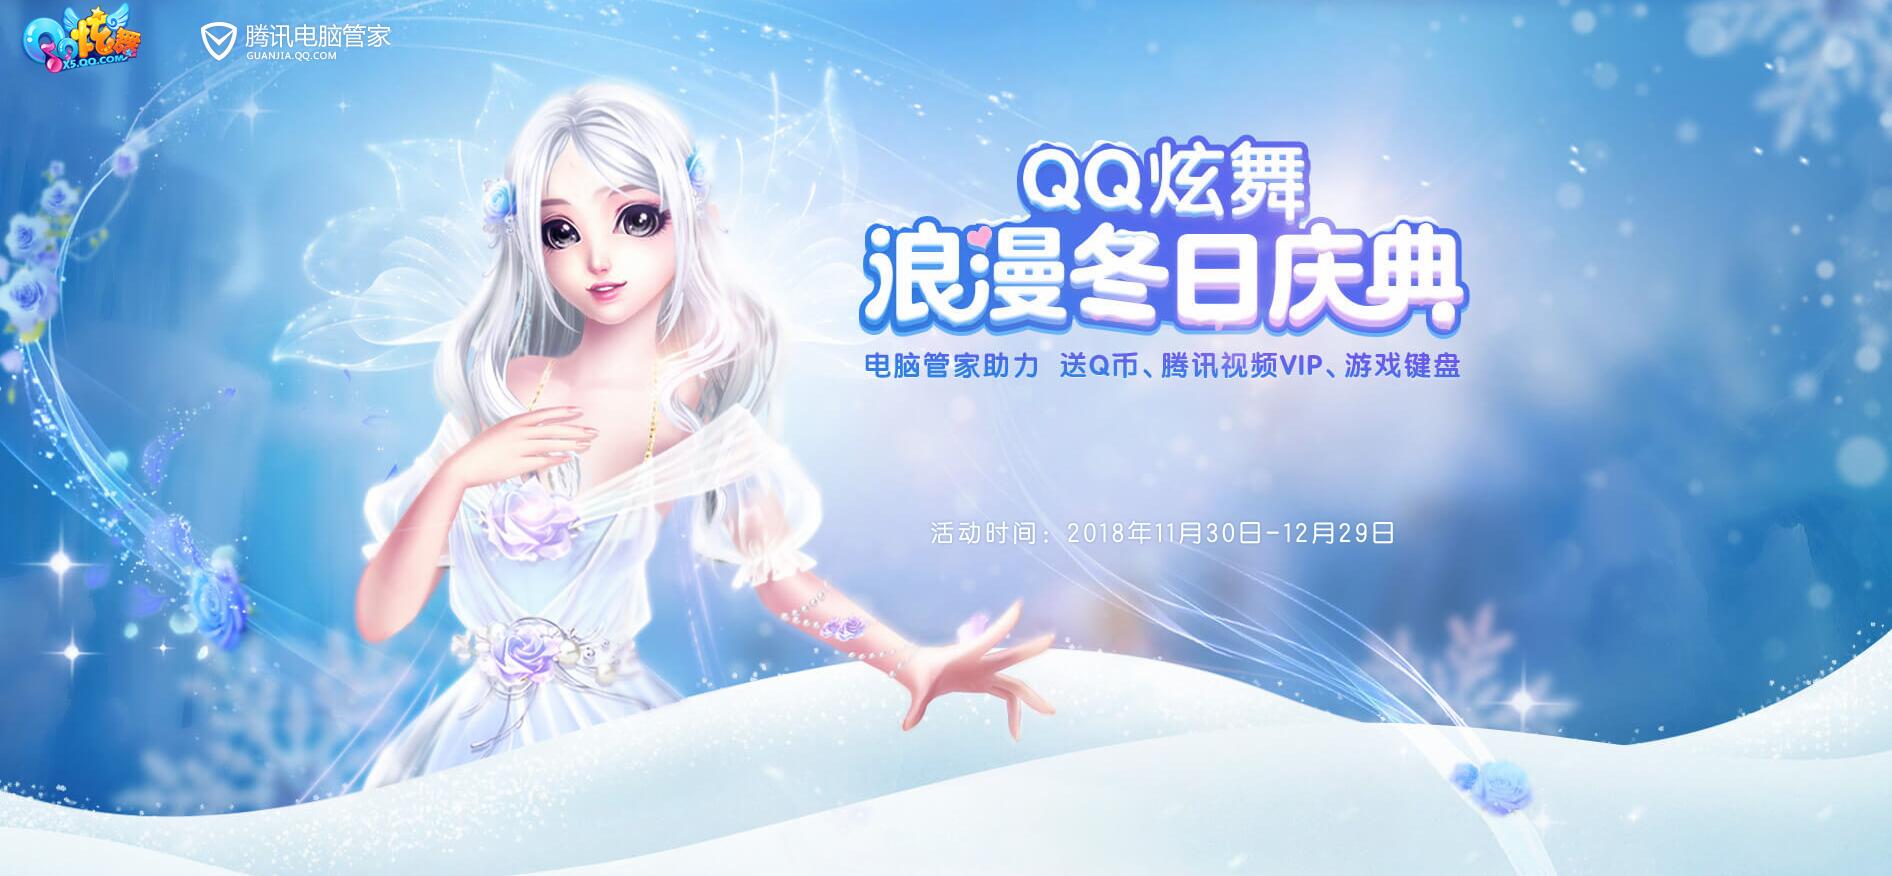 《QQ炫舞》浪漫冬日庆典，电脑管家助力